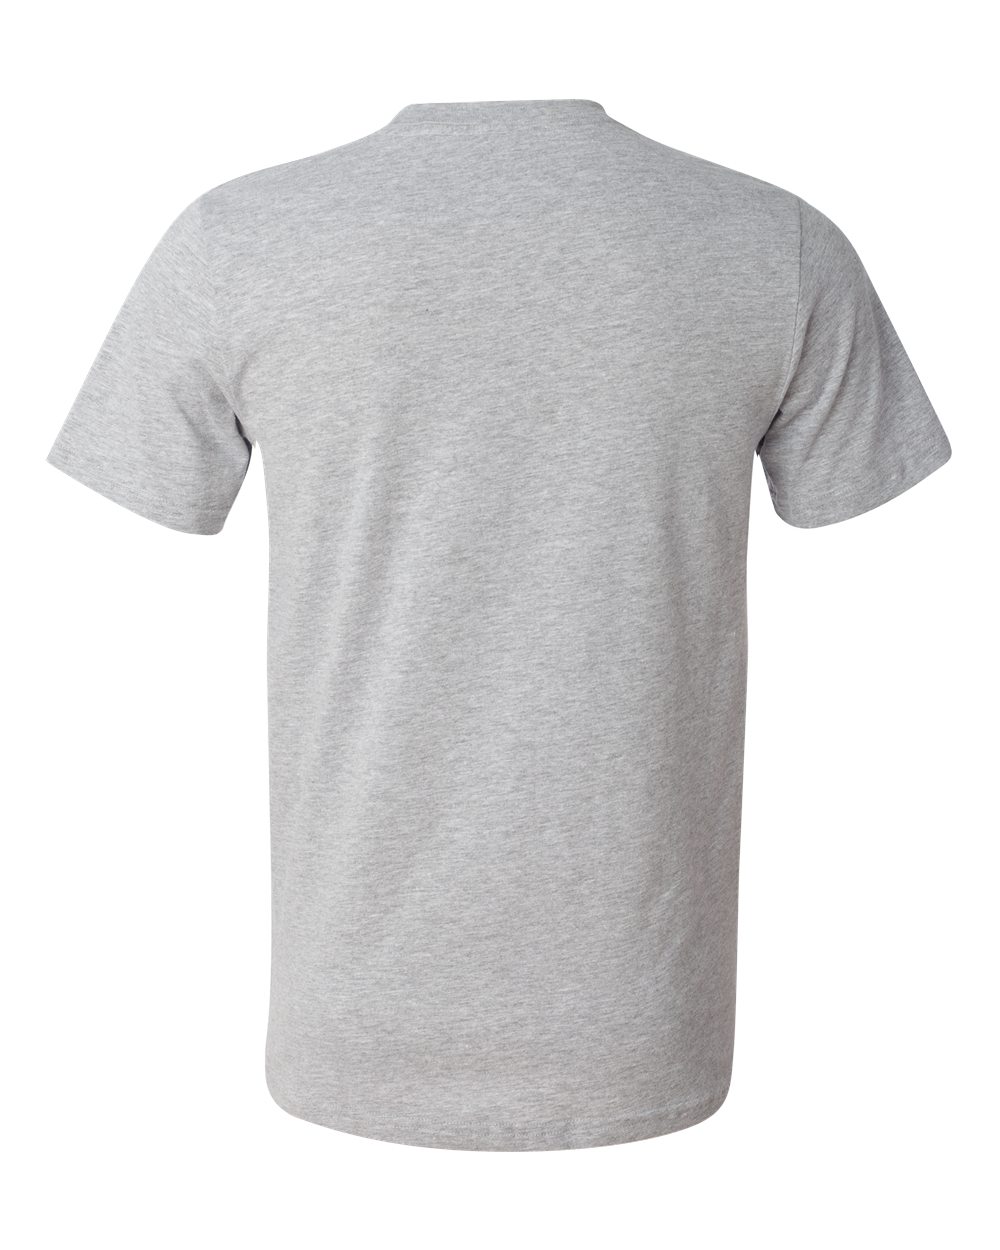 BELLA+CANVAS® Unisex Jersey T-Shirt - Blank